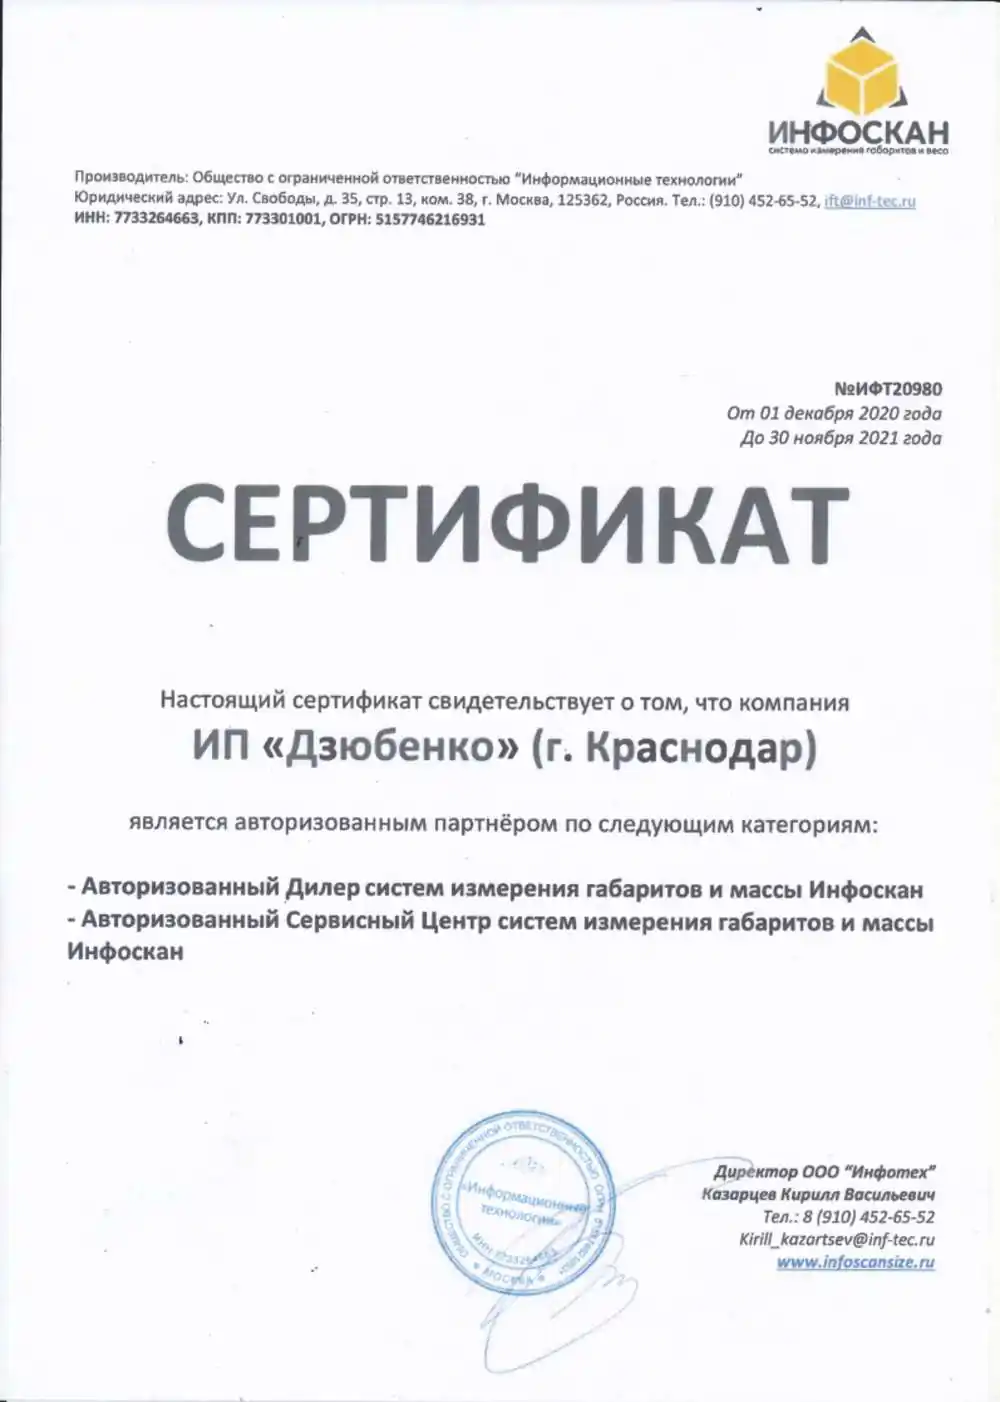 Сертификат Infoscan